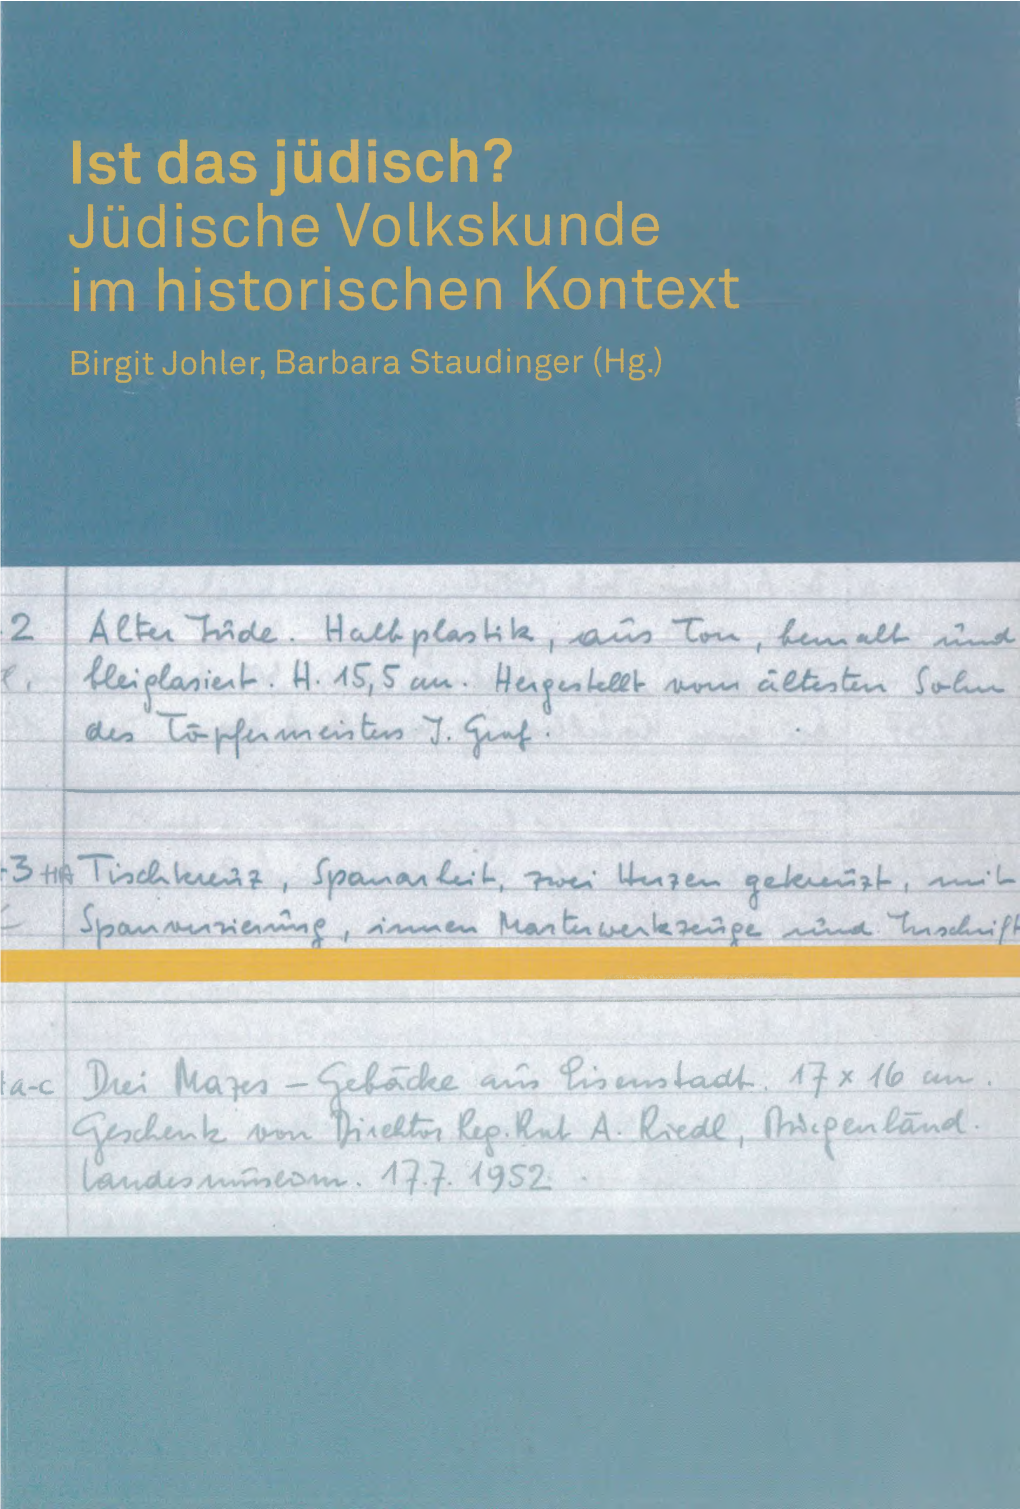 Jüdische Volkskunde Im Historischen Kontext Birgit Johler, Barbara Staudinger (Hg.)